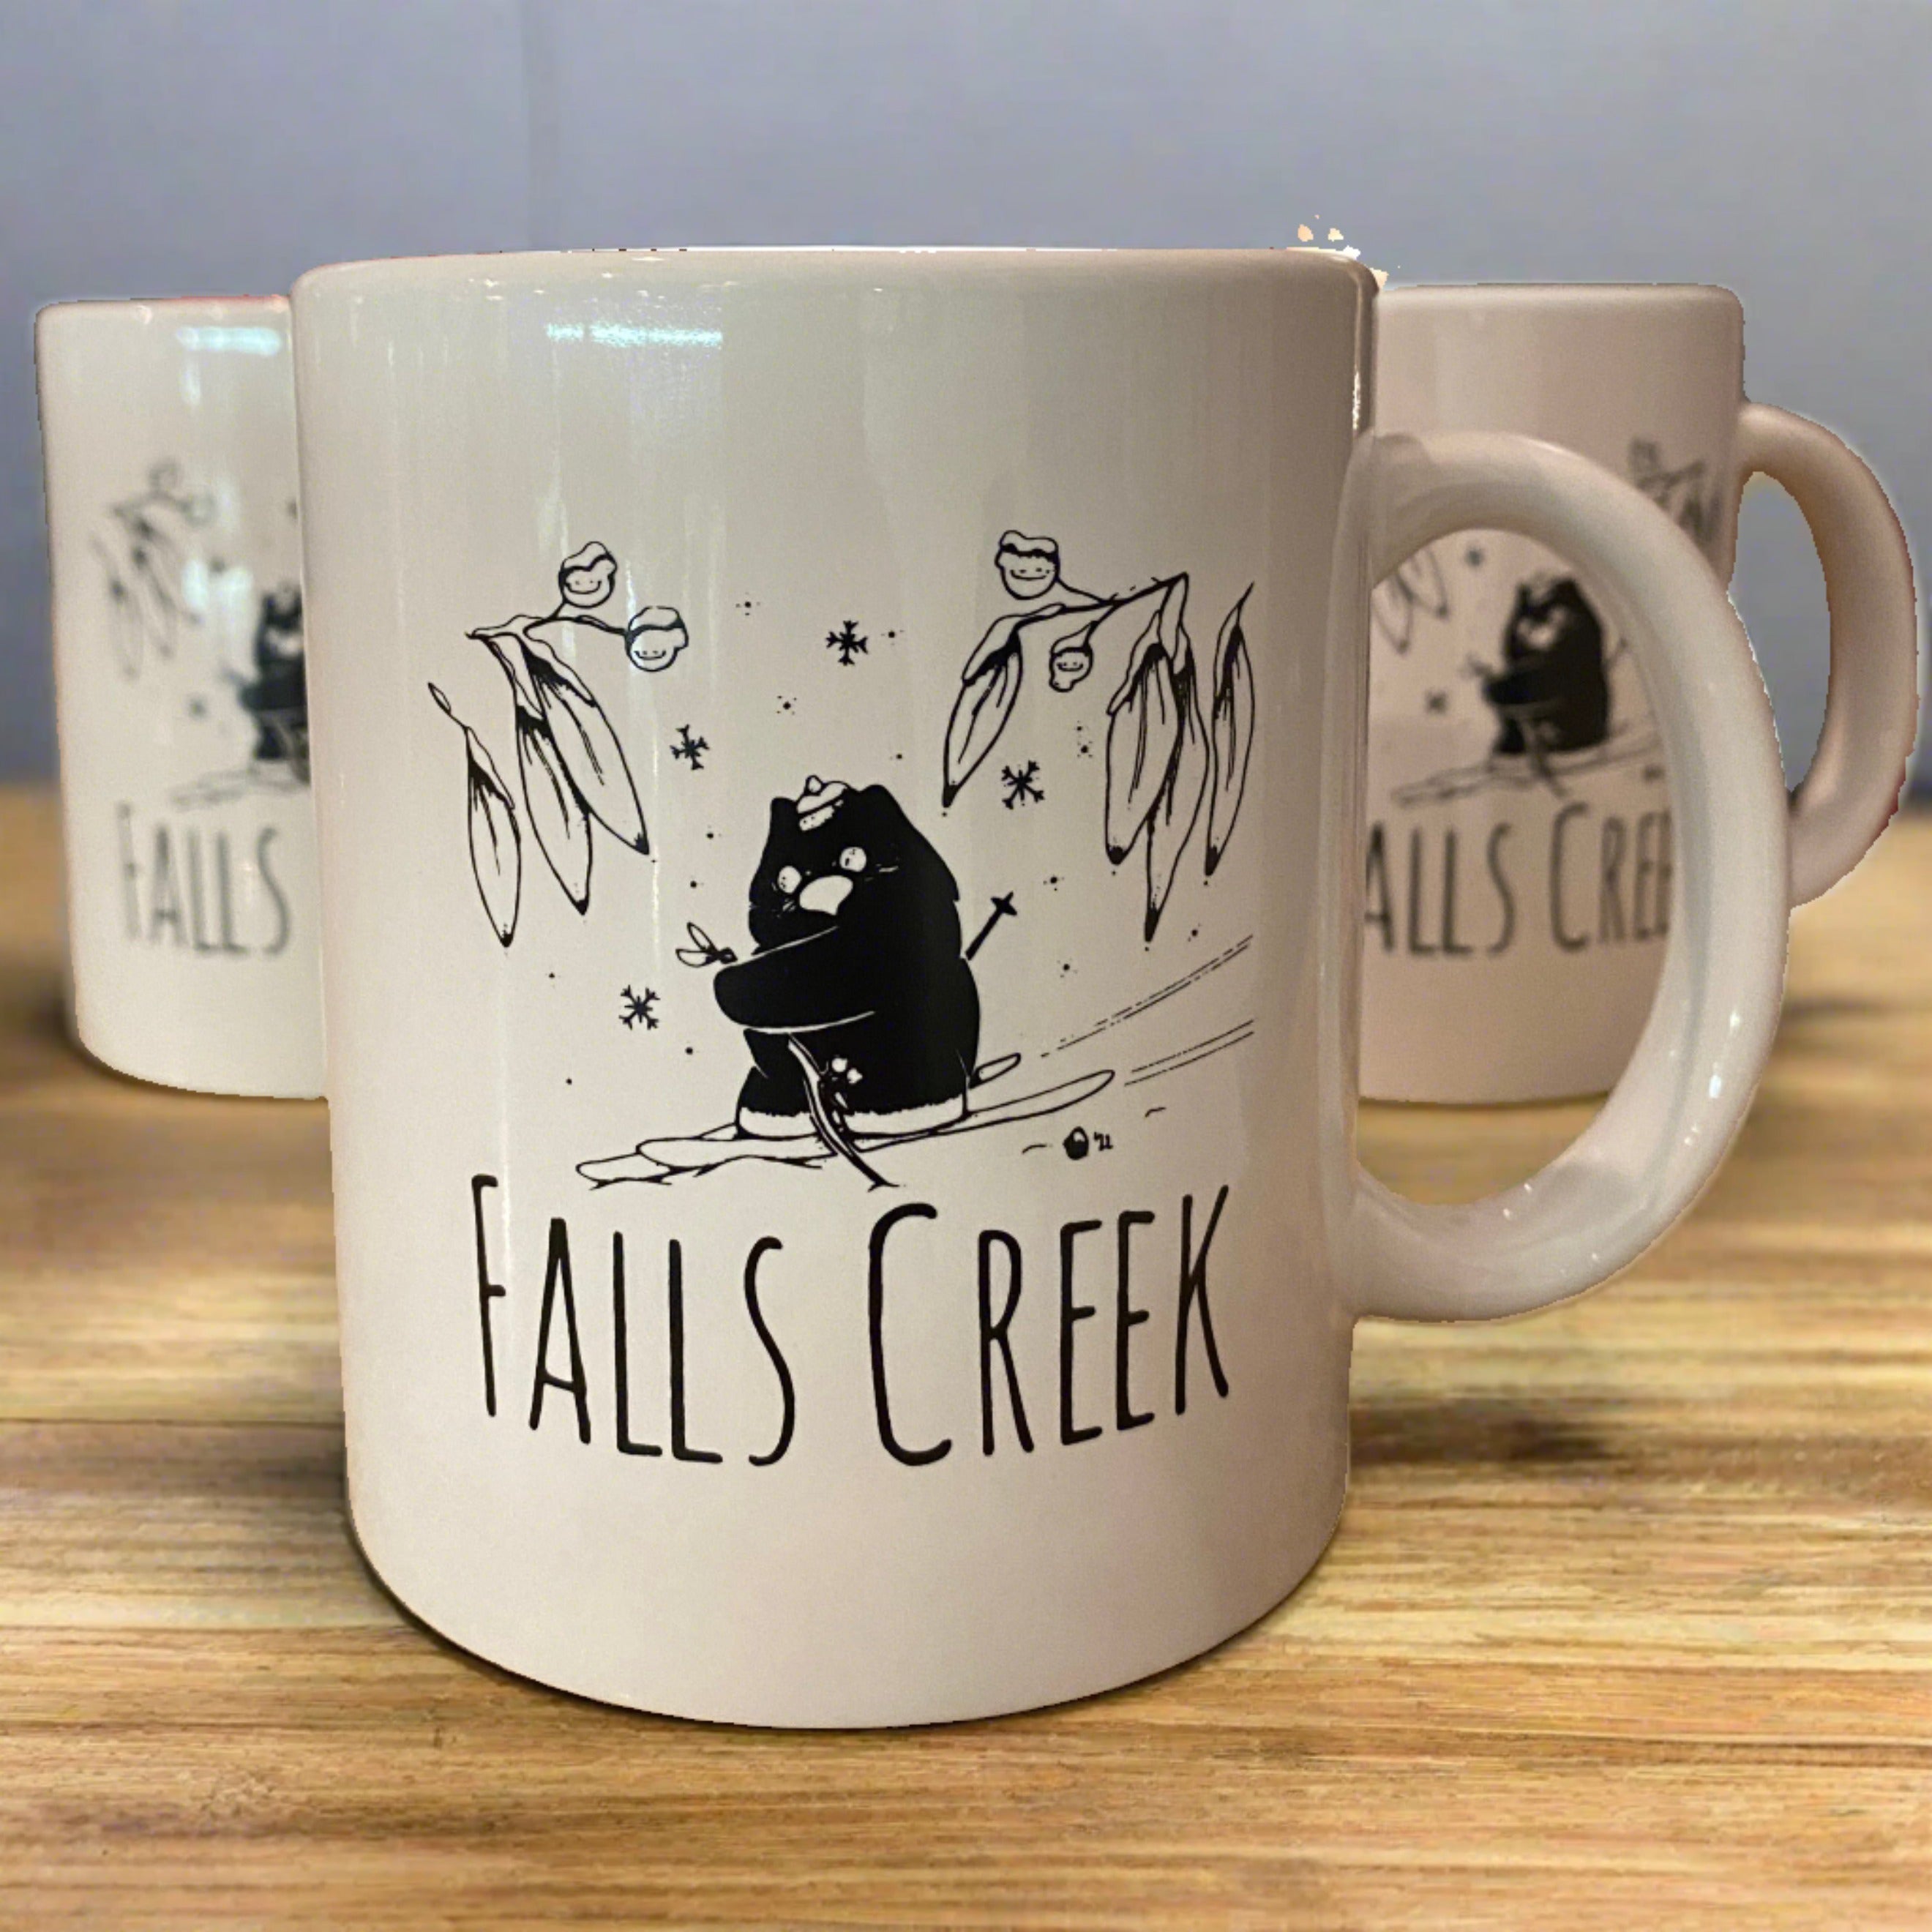 Falls Creek Agent K Ceramic Mugs. Close up 3 mugs on wooden tale top, close up